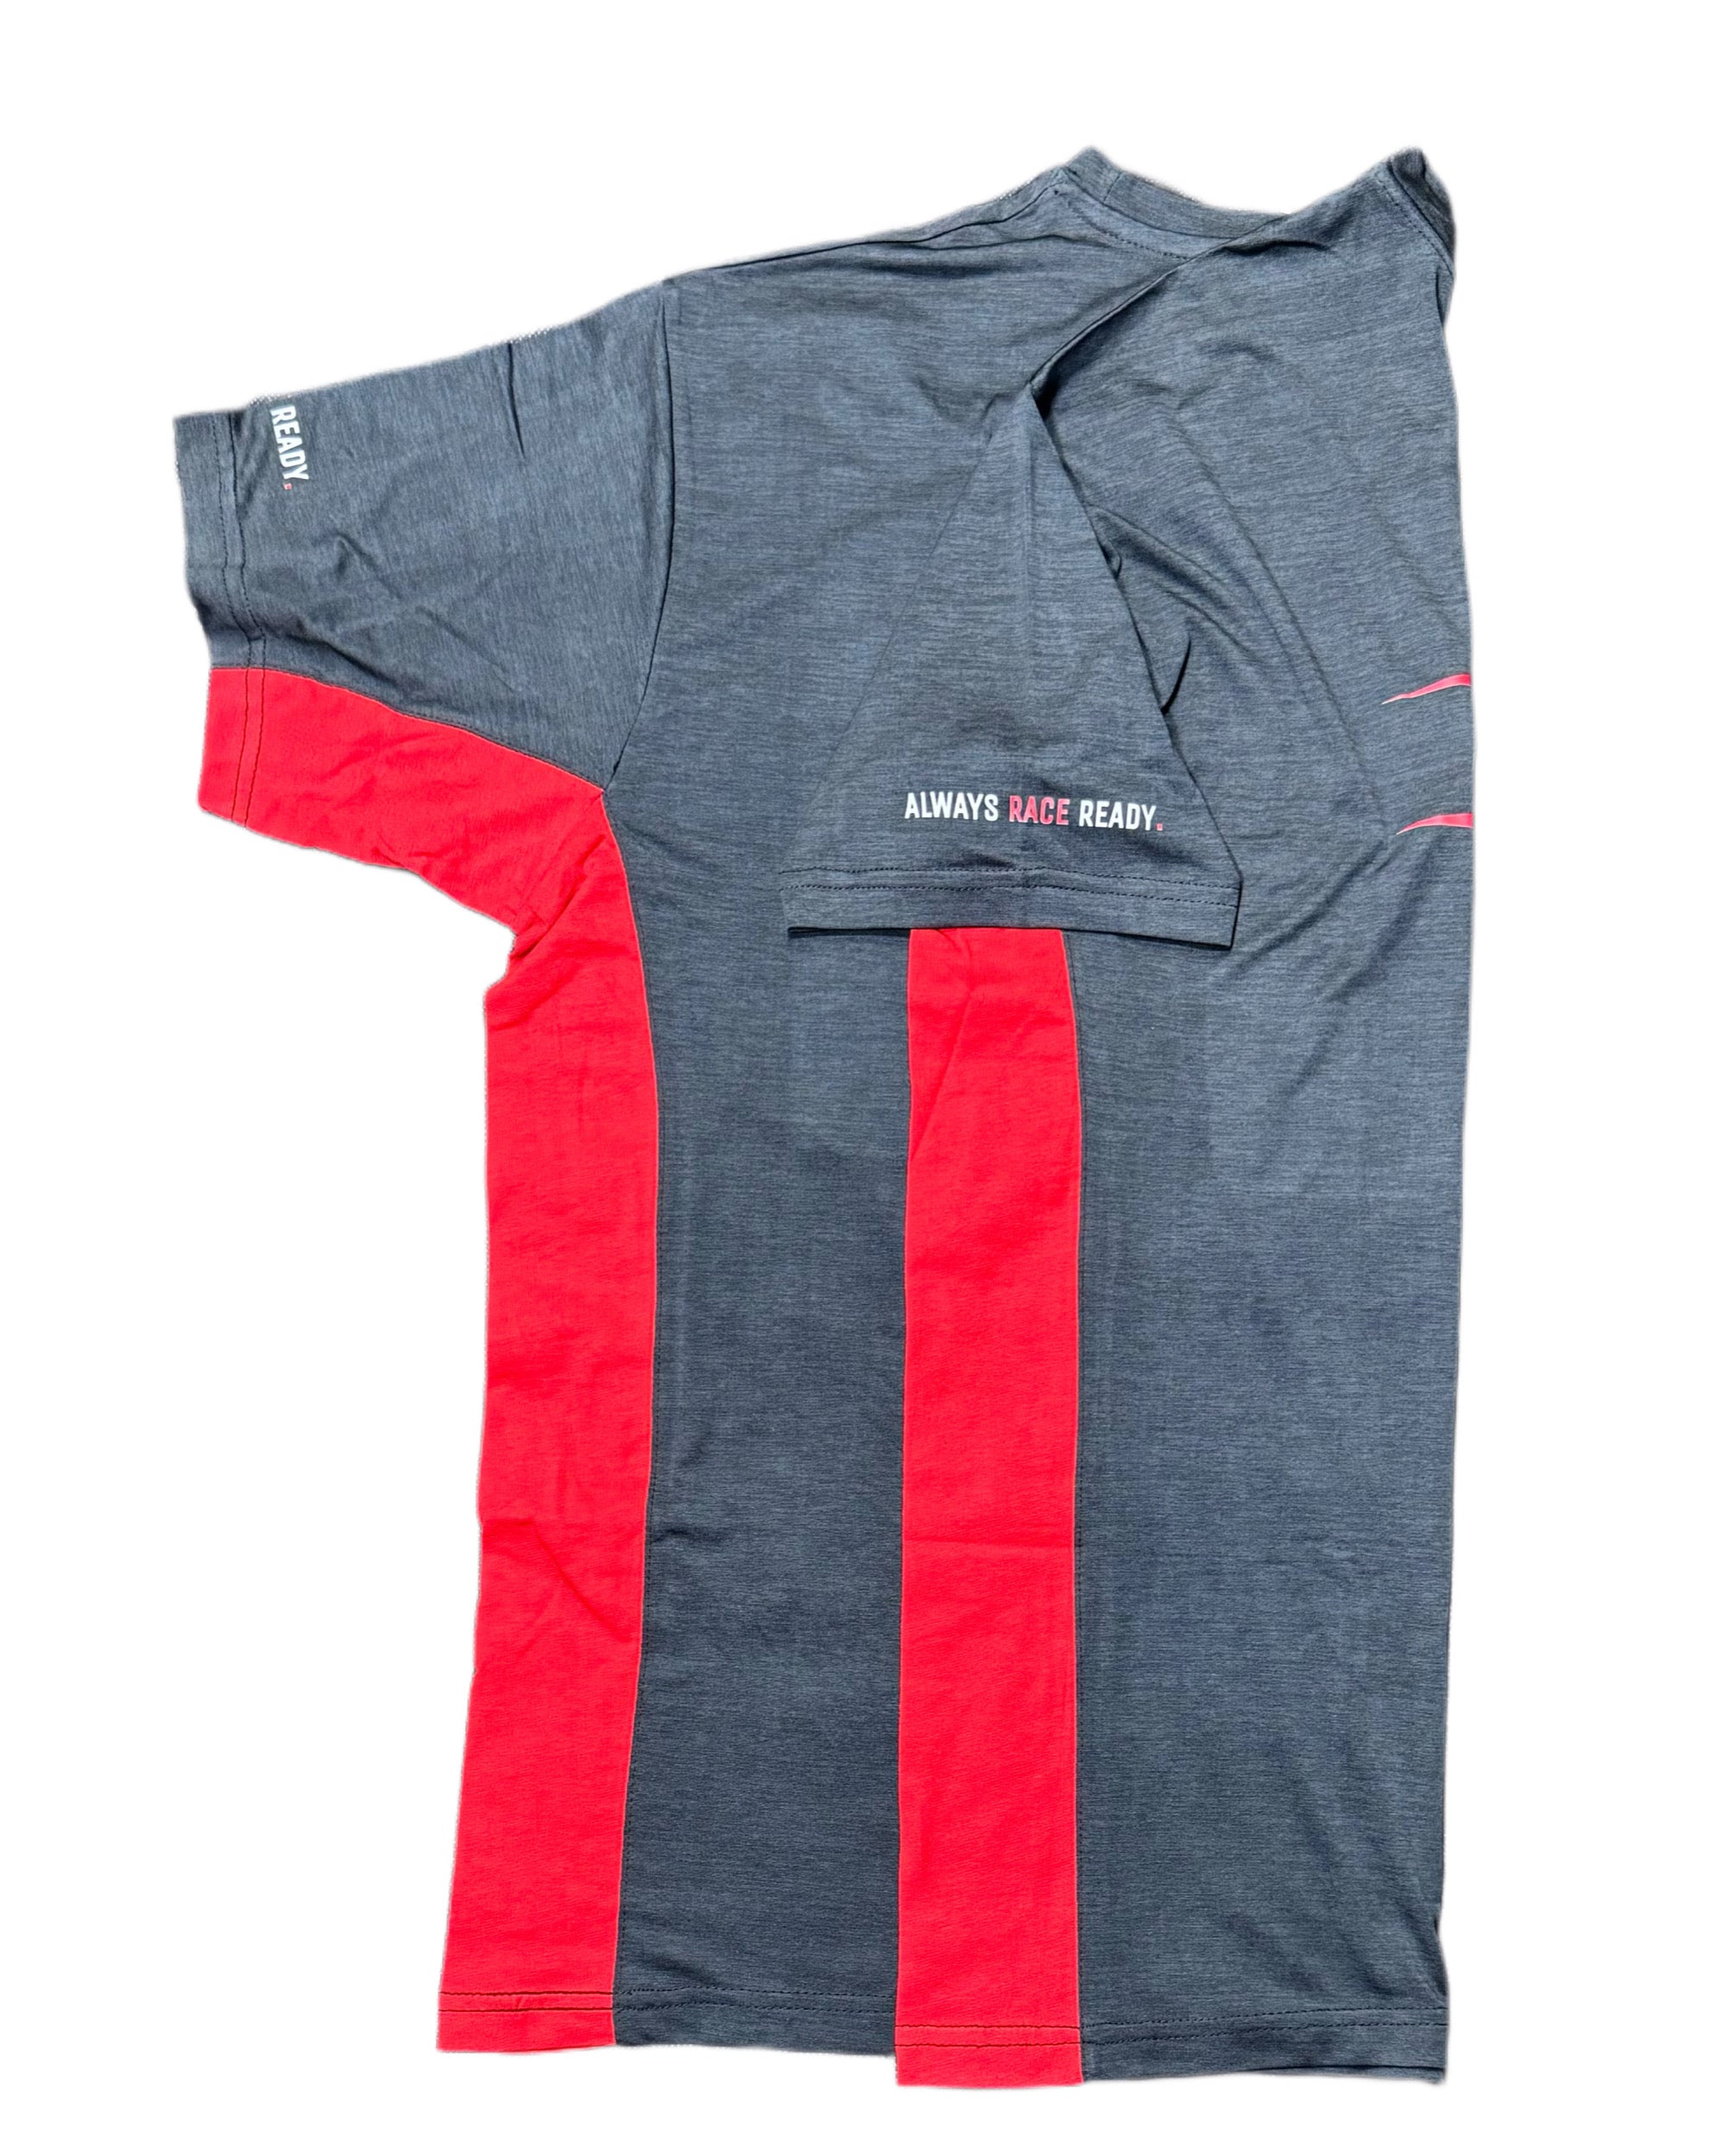 OneX USA Racing Unisex T-Shirt - Black